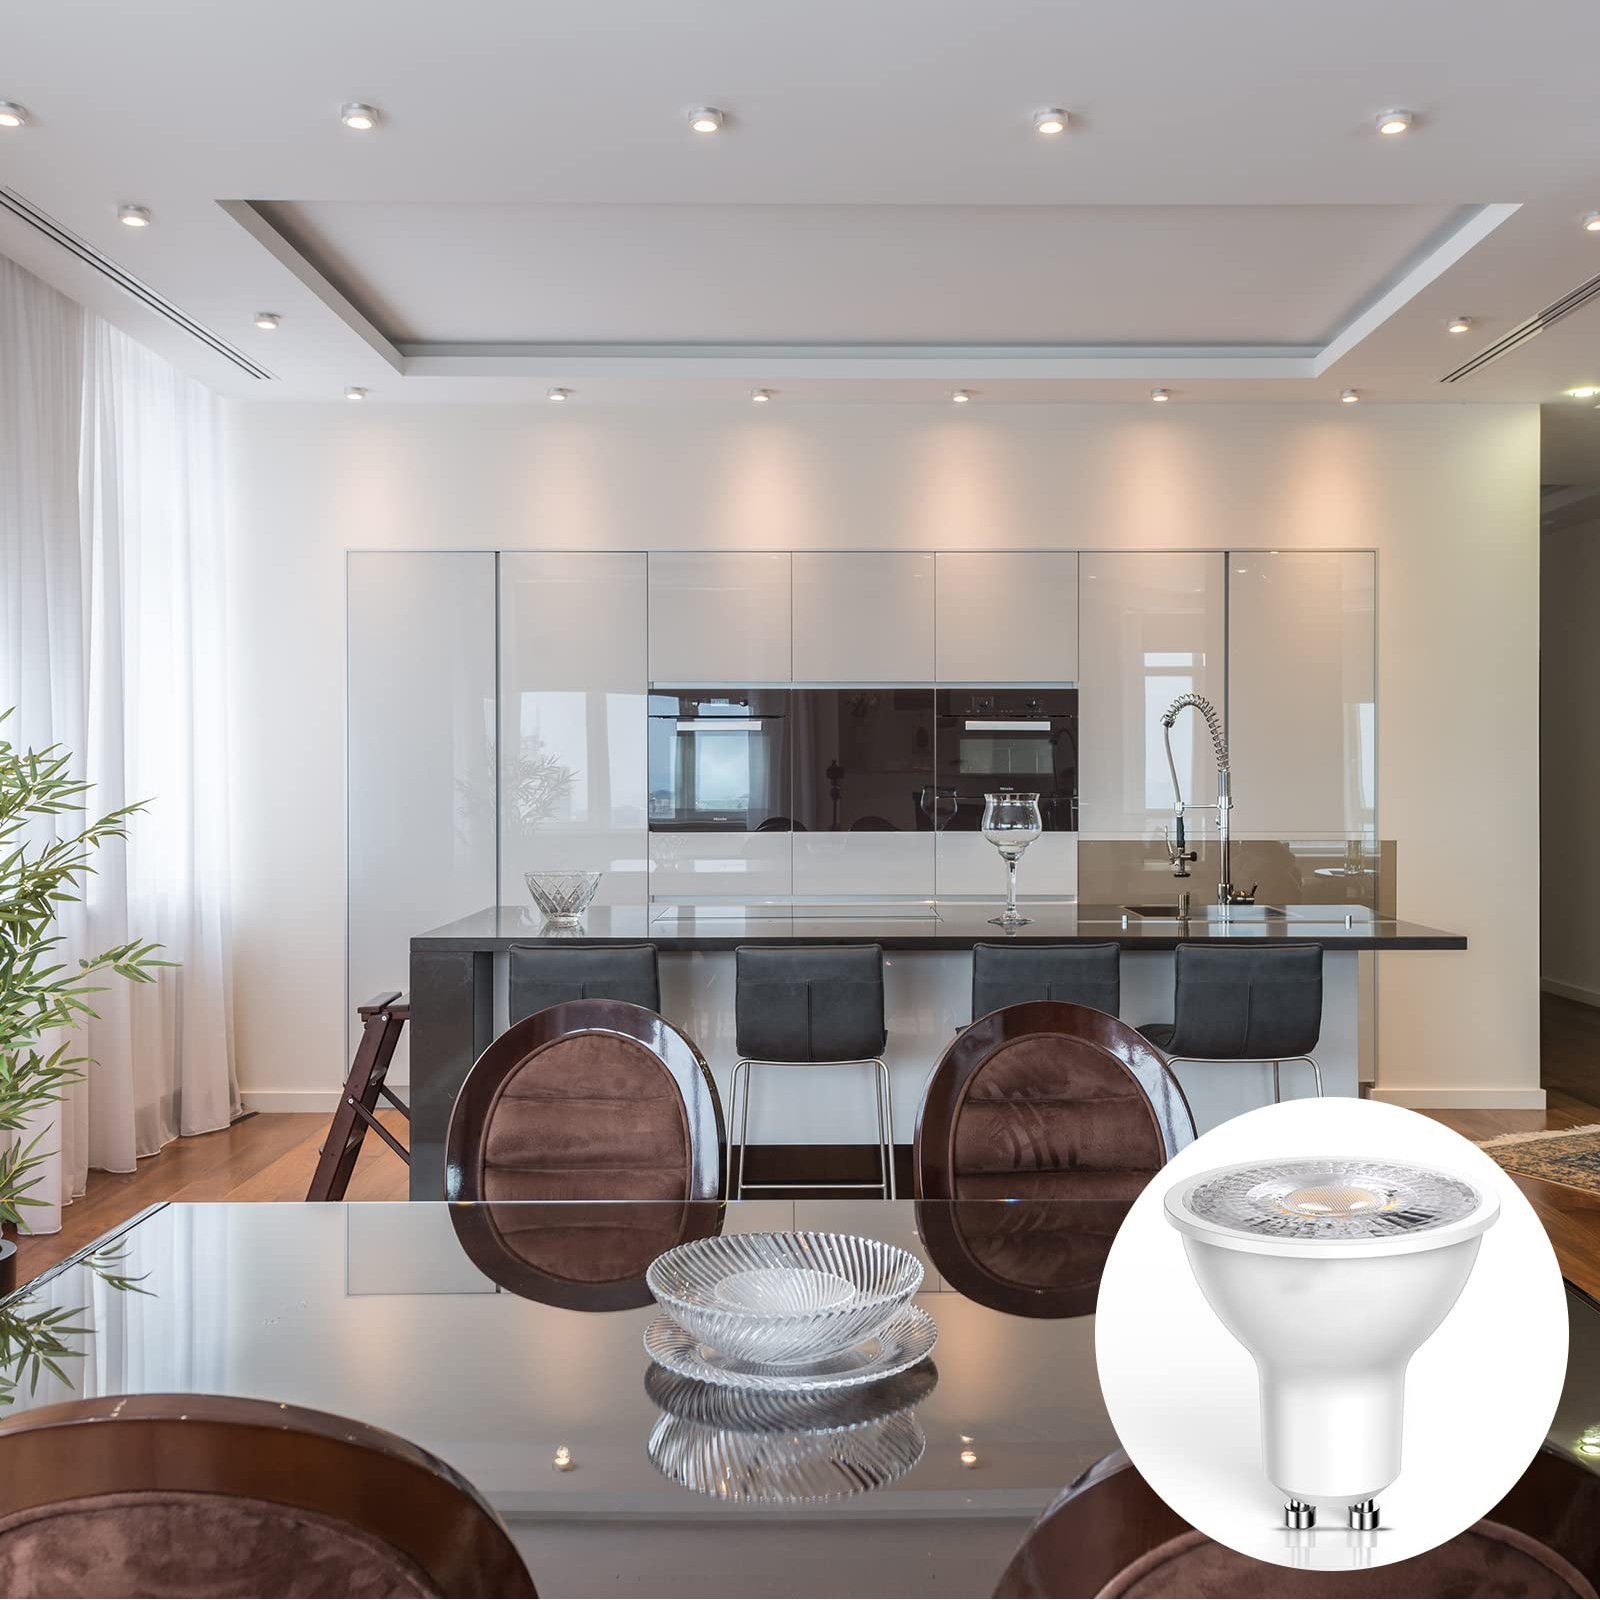 6500K Weiß,LED-Leuchtmittel, LED-Glühbirne Lumen MUPOO GU10 Birne 270°Spot Lampe LED-Leuchtmittel 7W,10St.LED Reflektor Energiesparlampe